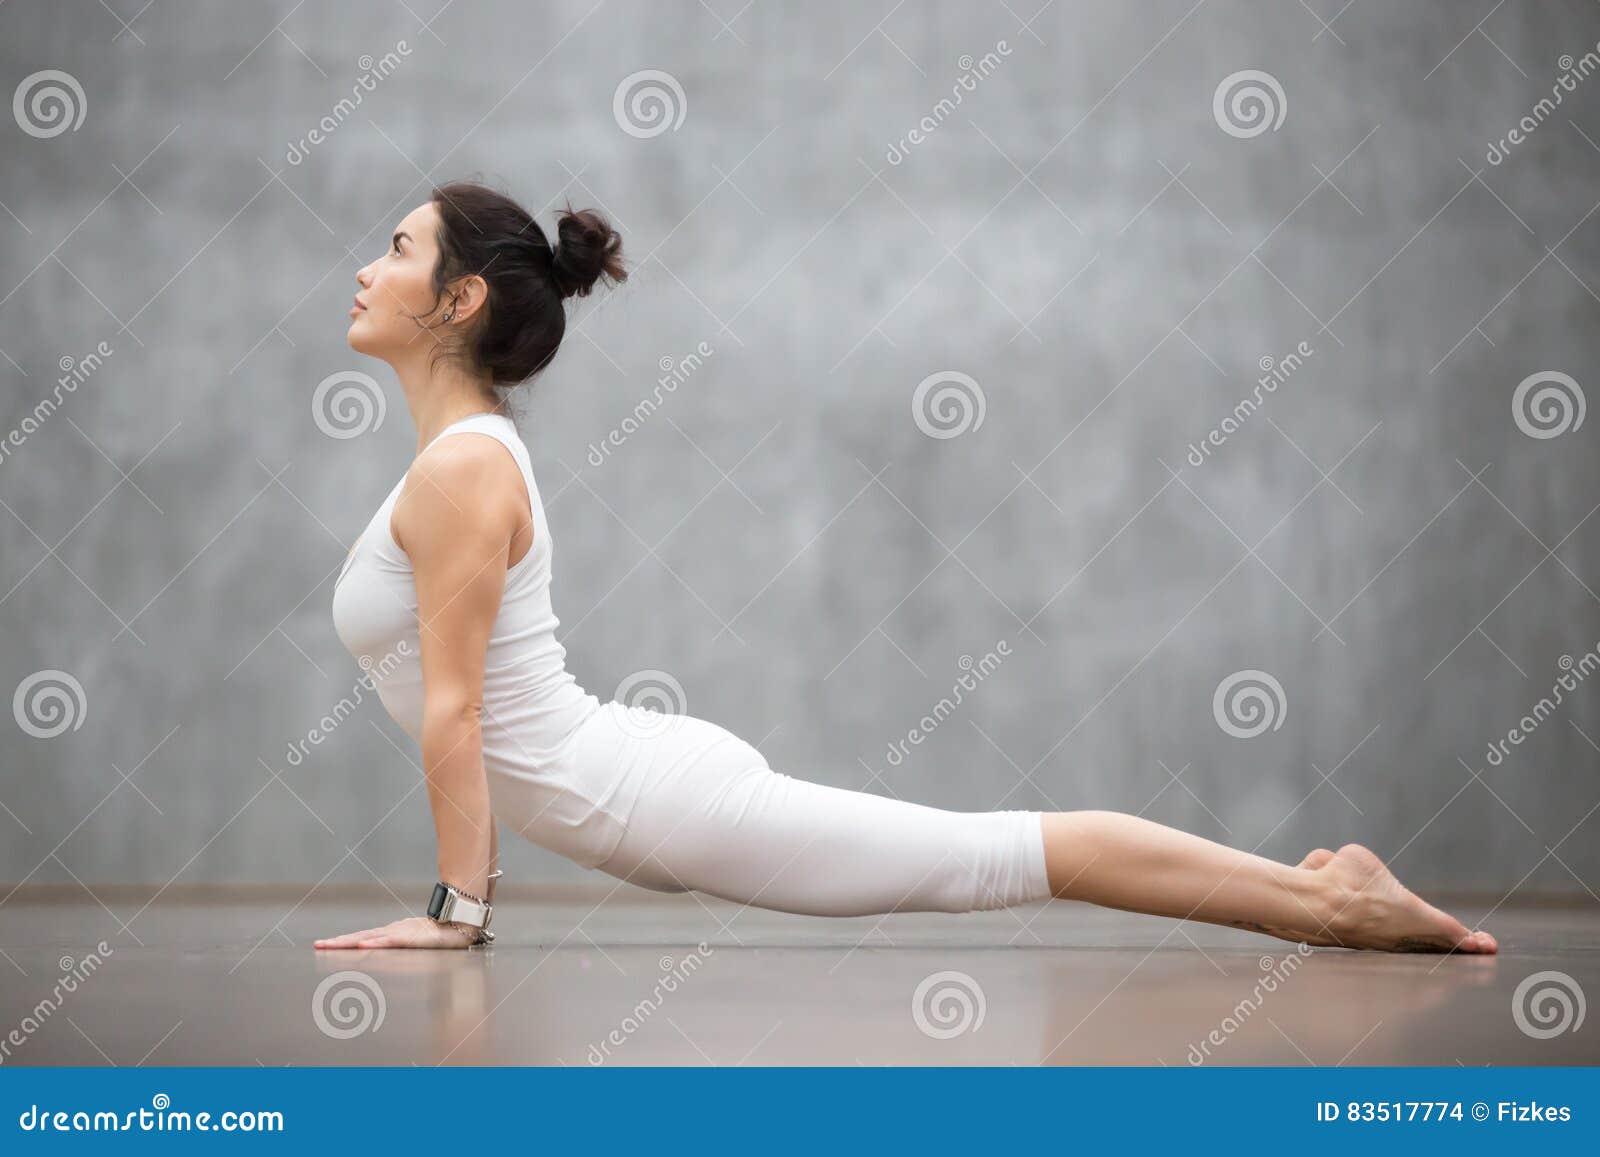 beautiful yoga: upward facing dog pose